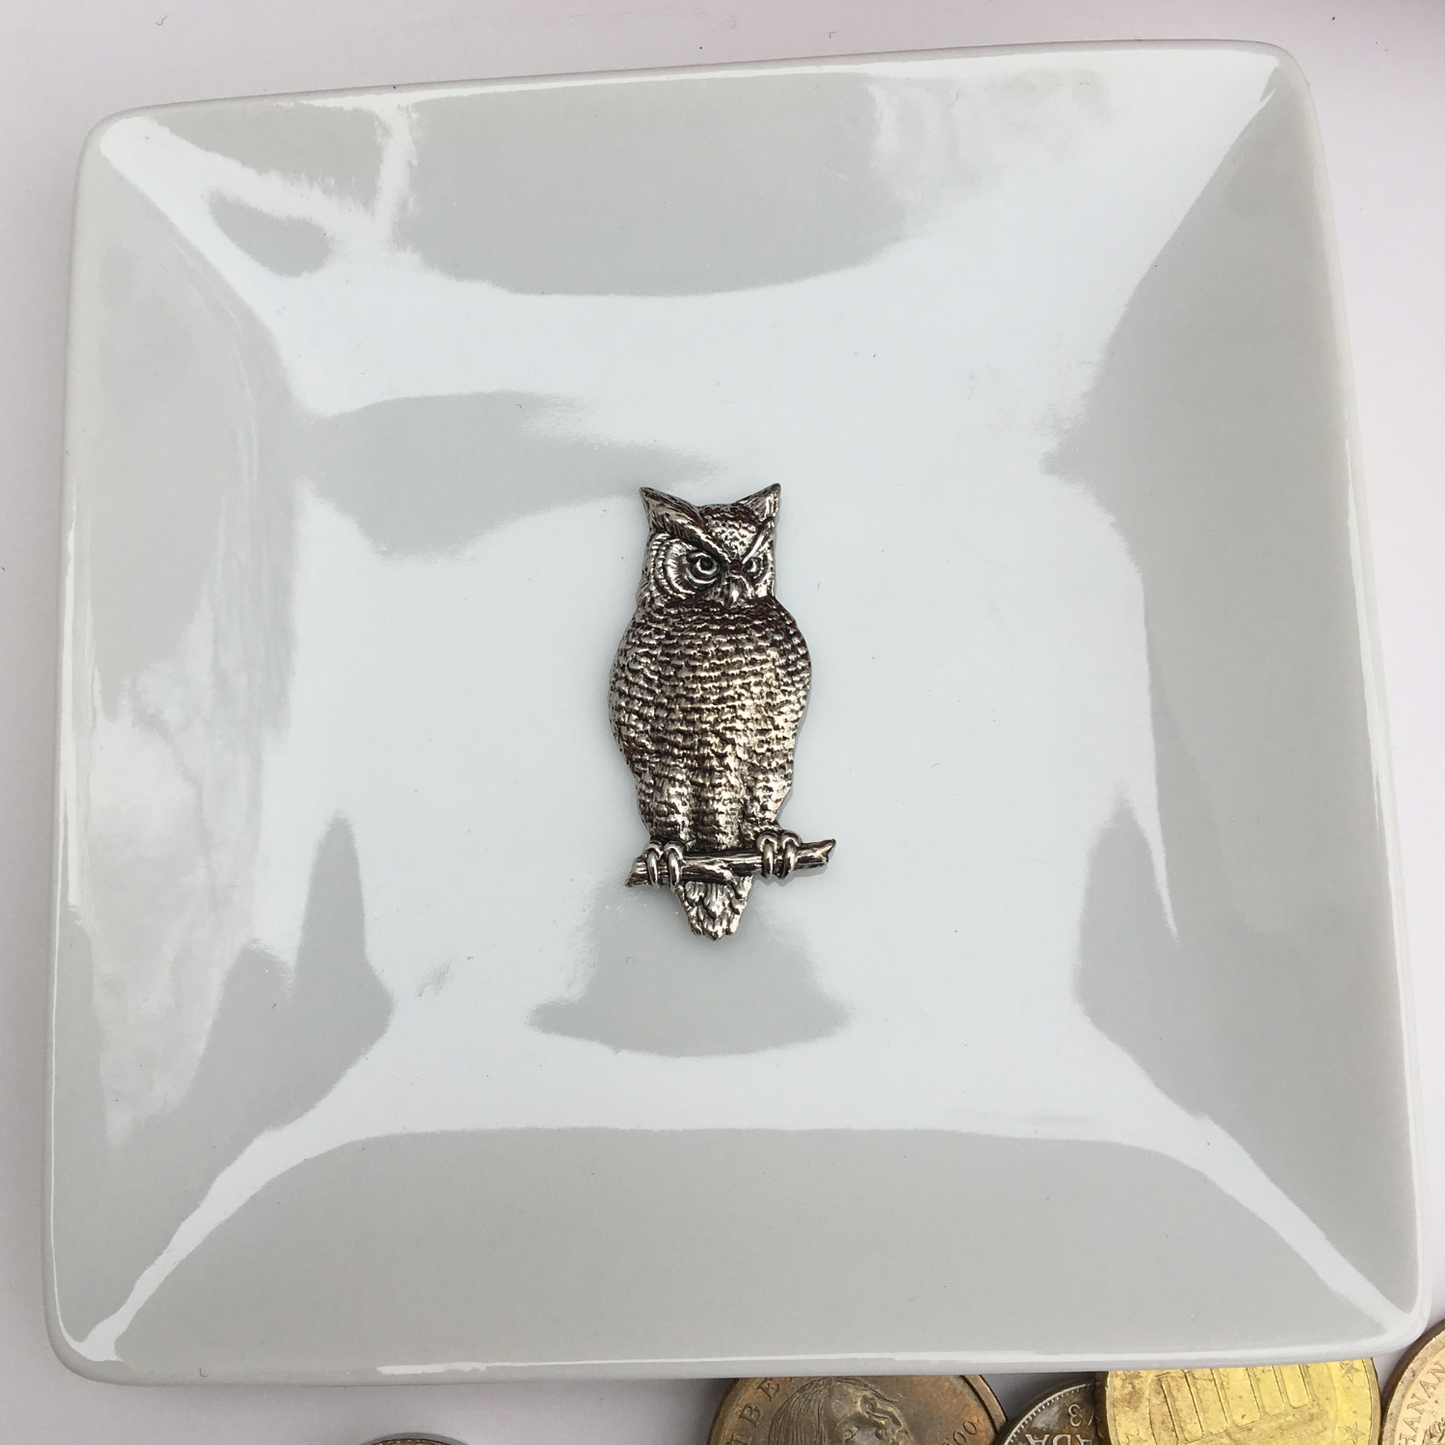 Trinket Tray, White Porcelain Dish, Silver Owl Medallion